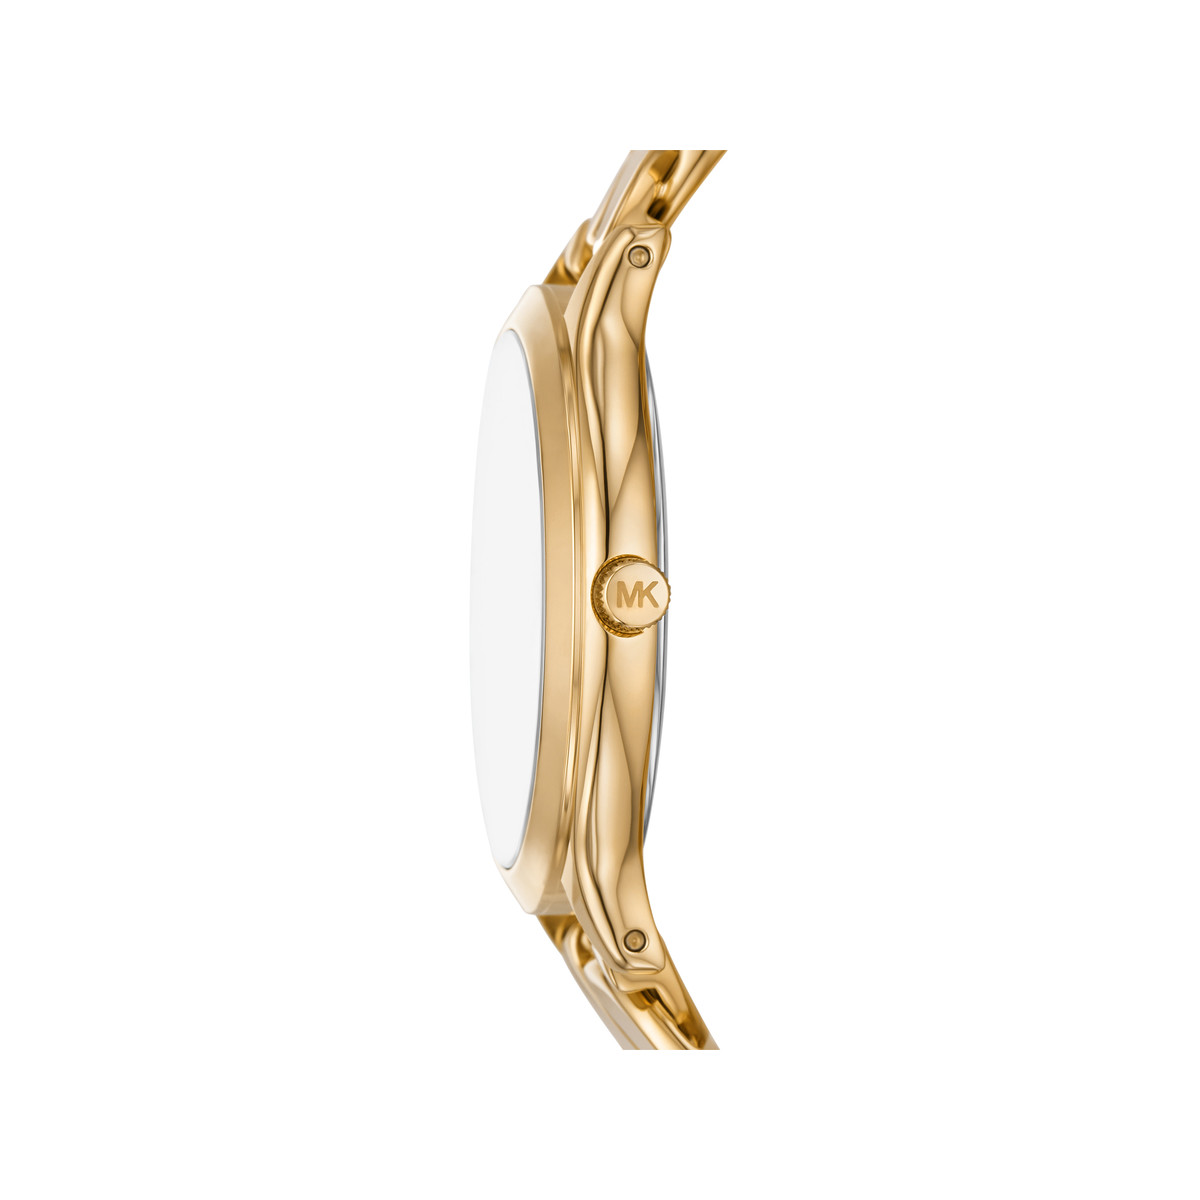 Montre MICHAEL KORS runway femme bracelet acier inoxydable doré - vue 2